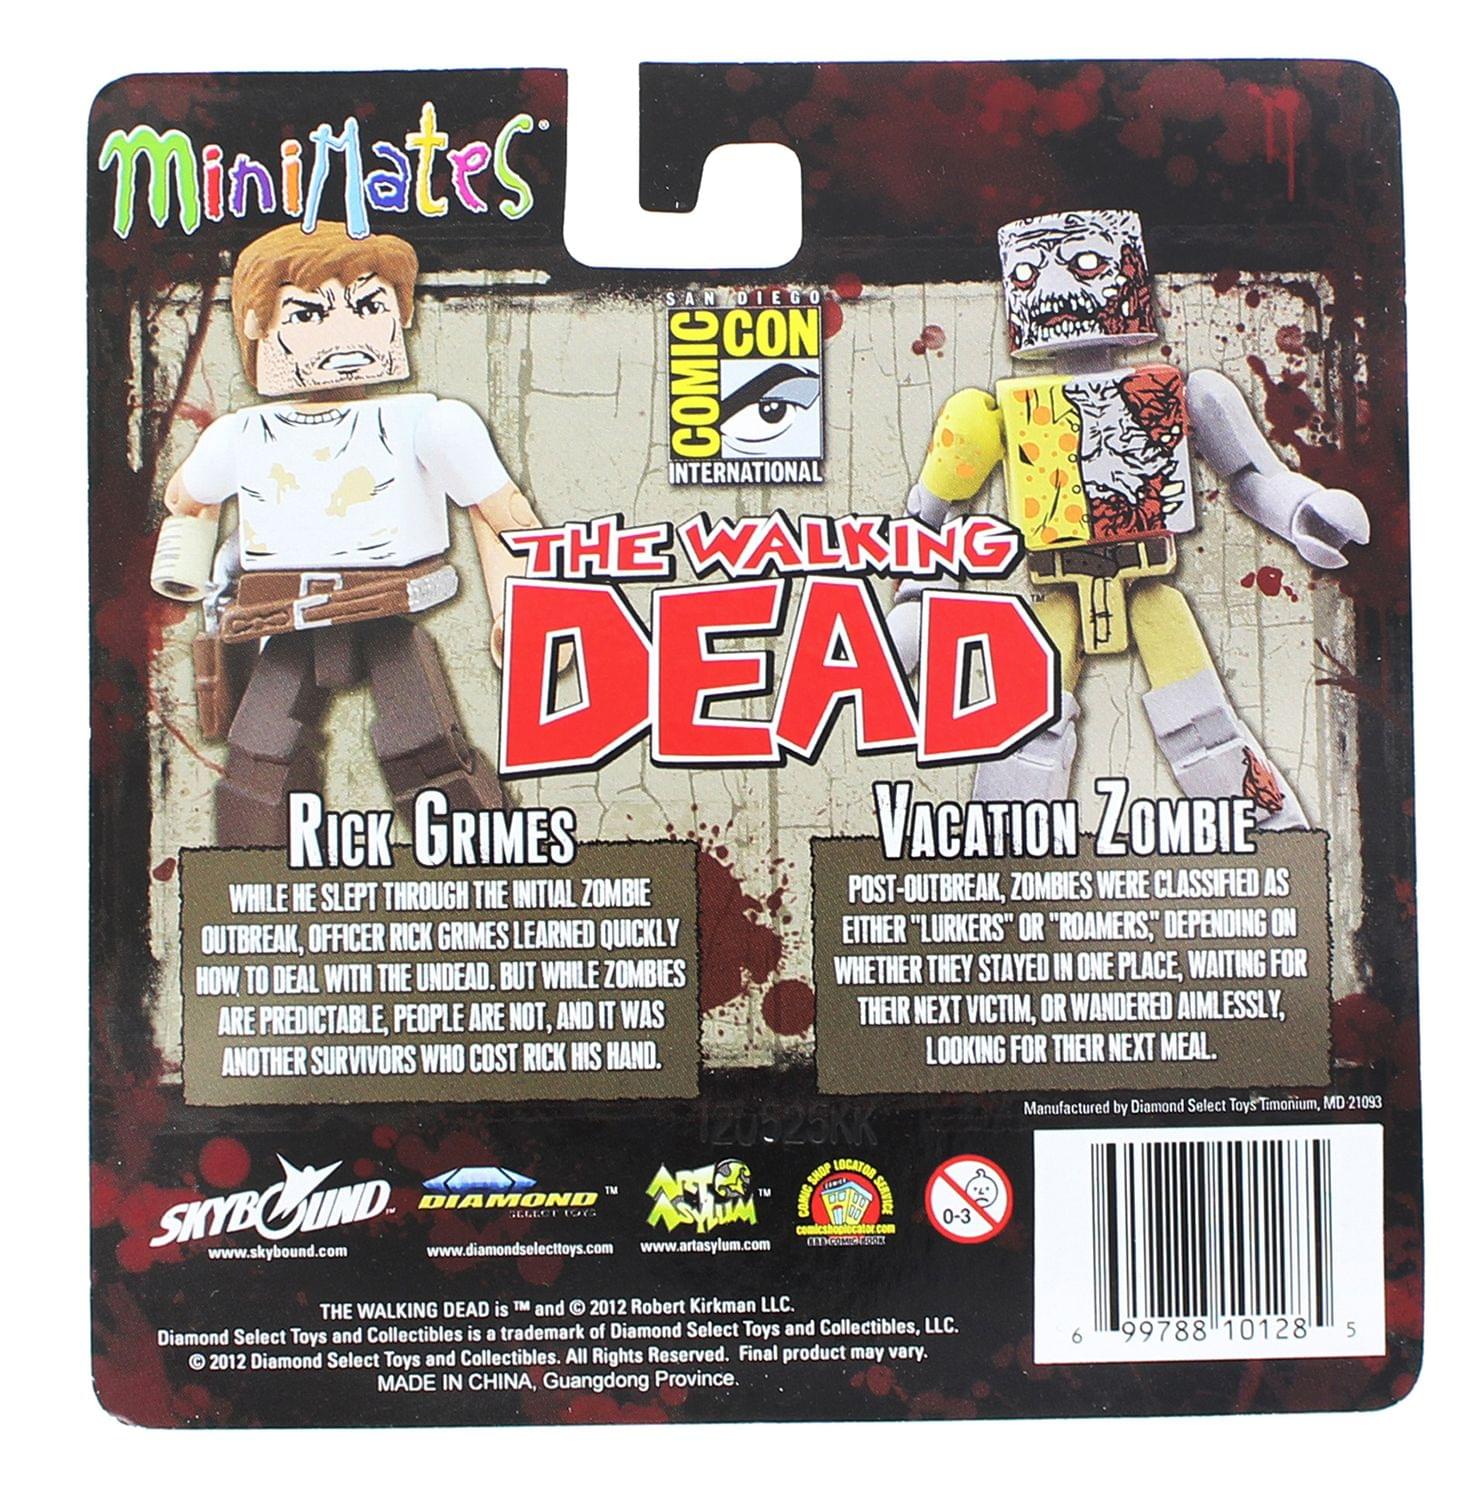 The Walking Dead Exclusive Minimates 2 Pack - Rick Grimes & Walker